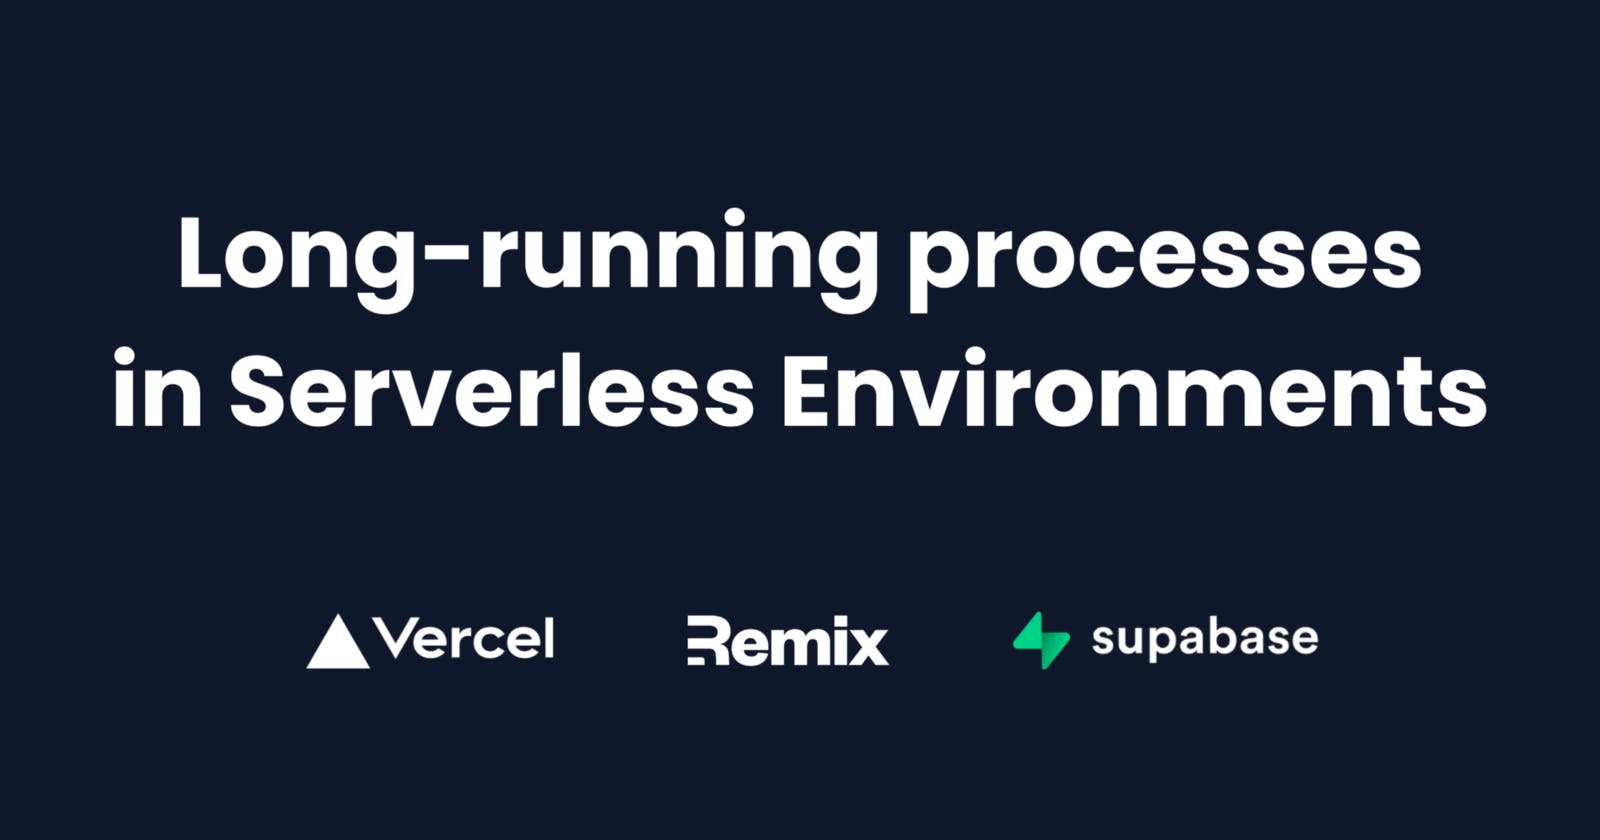 Long-running processes in Serverless Environments